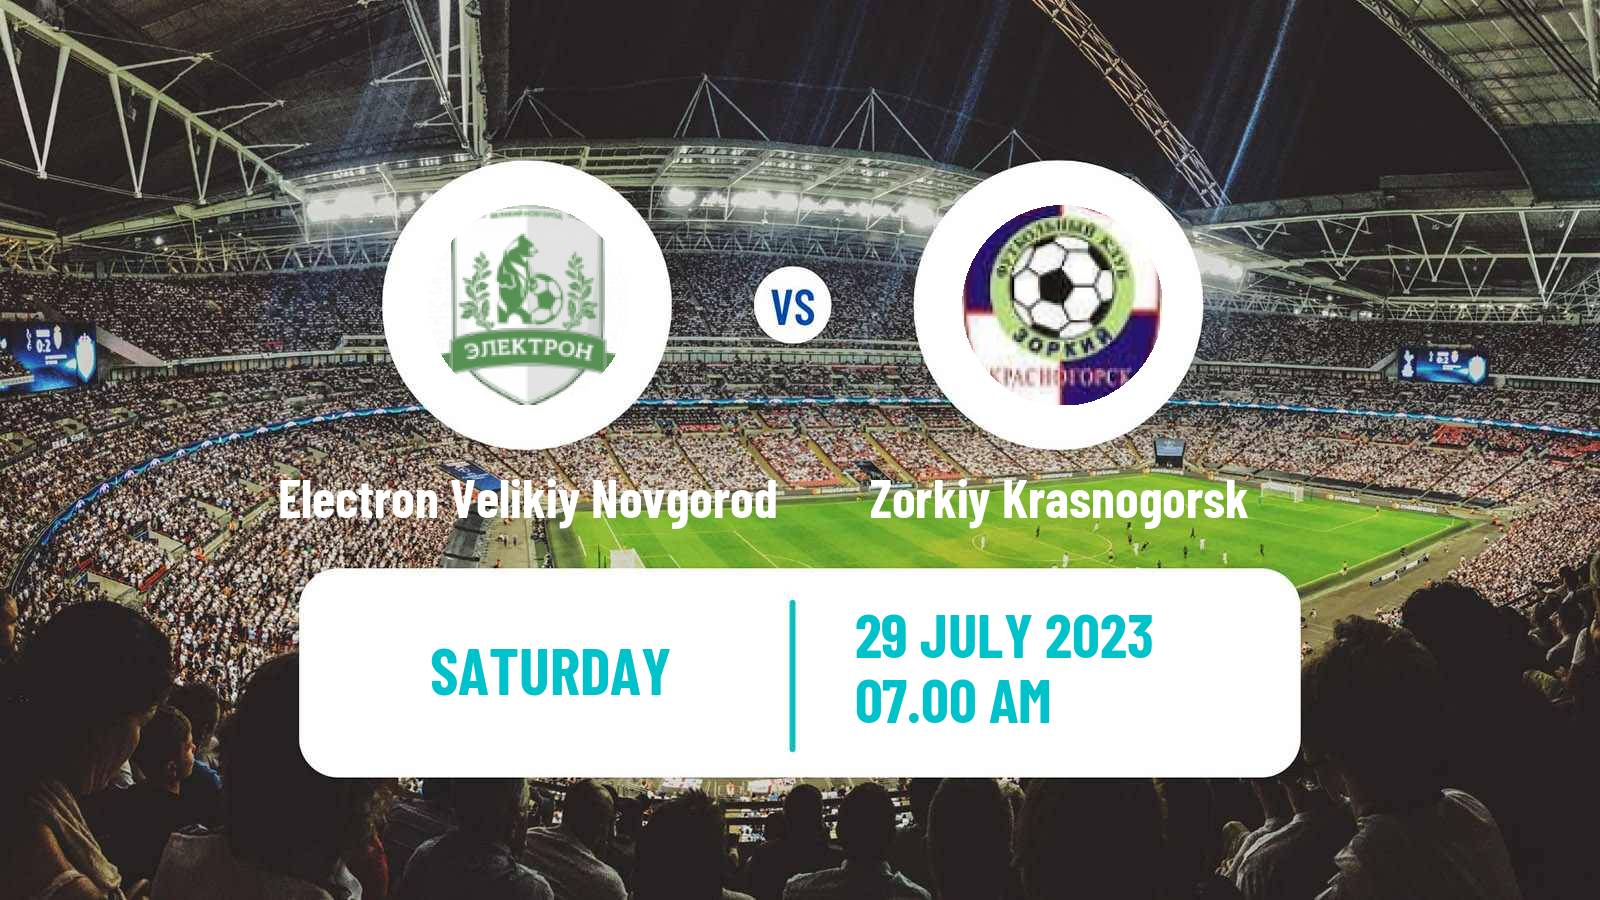 Soccer FNL 2 Division B Group 2 Electron Velikiy Novgorod - Zorkiy Krasnogorsk